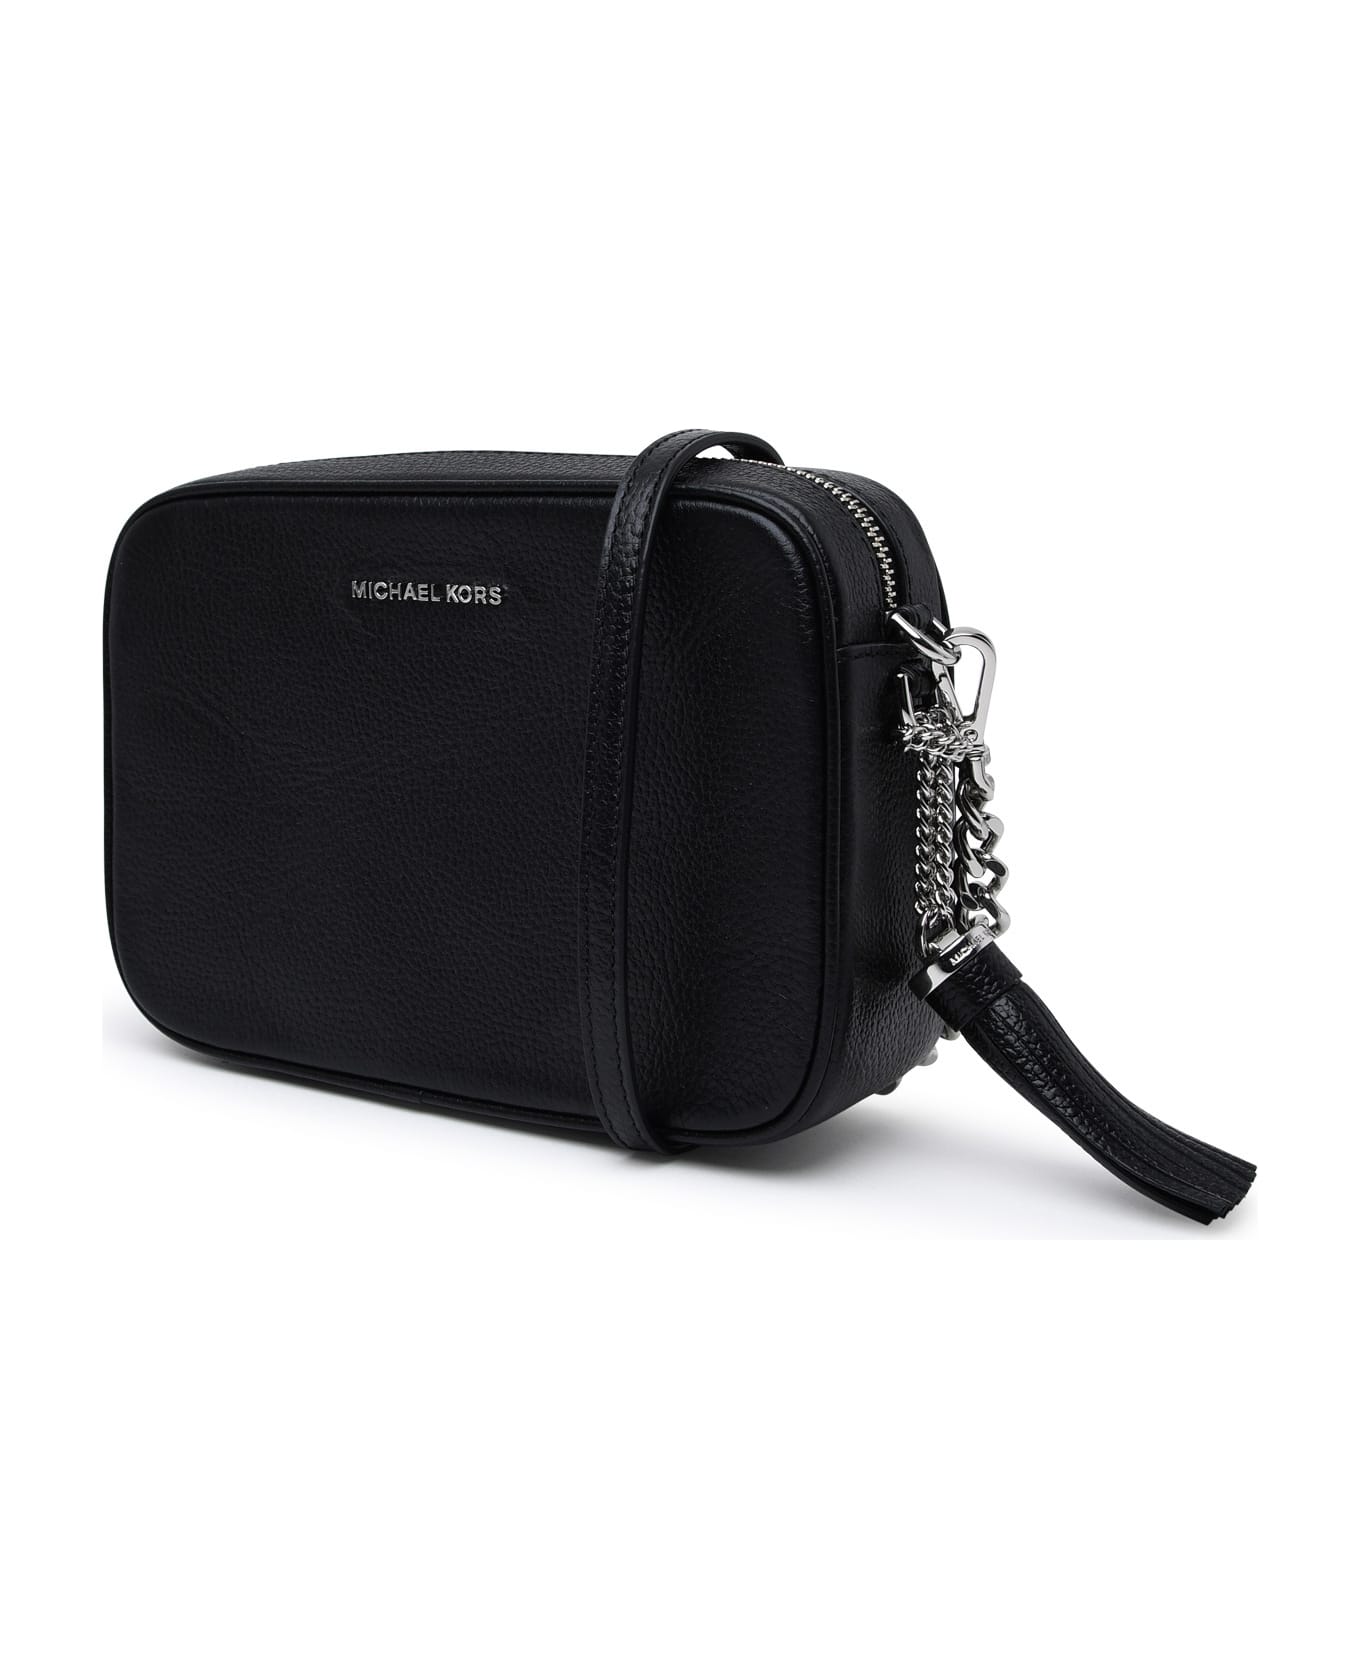 Michael Kors Collection Black Leather Ginny Cross-body Bag - Black